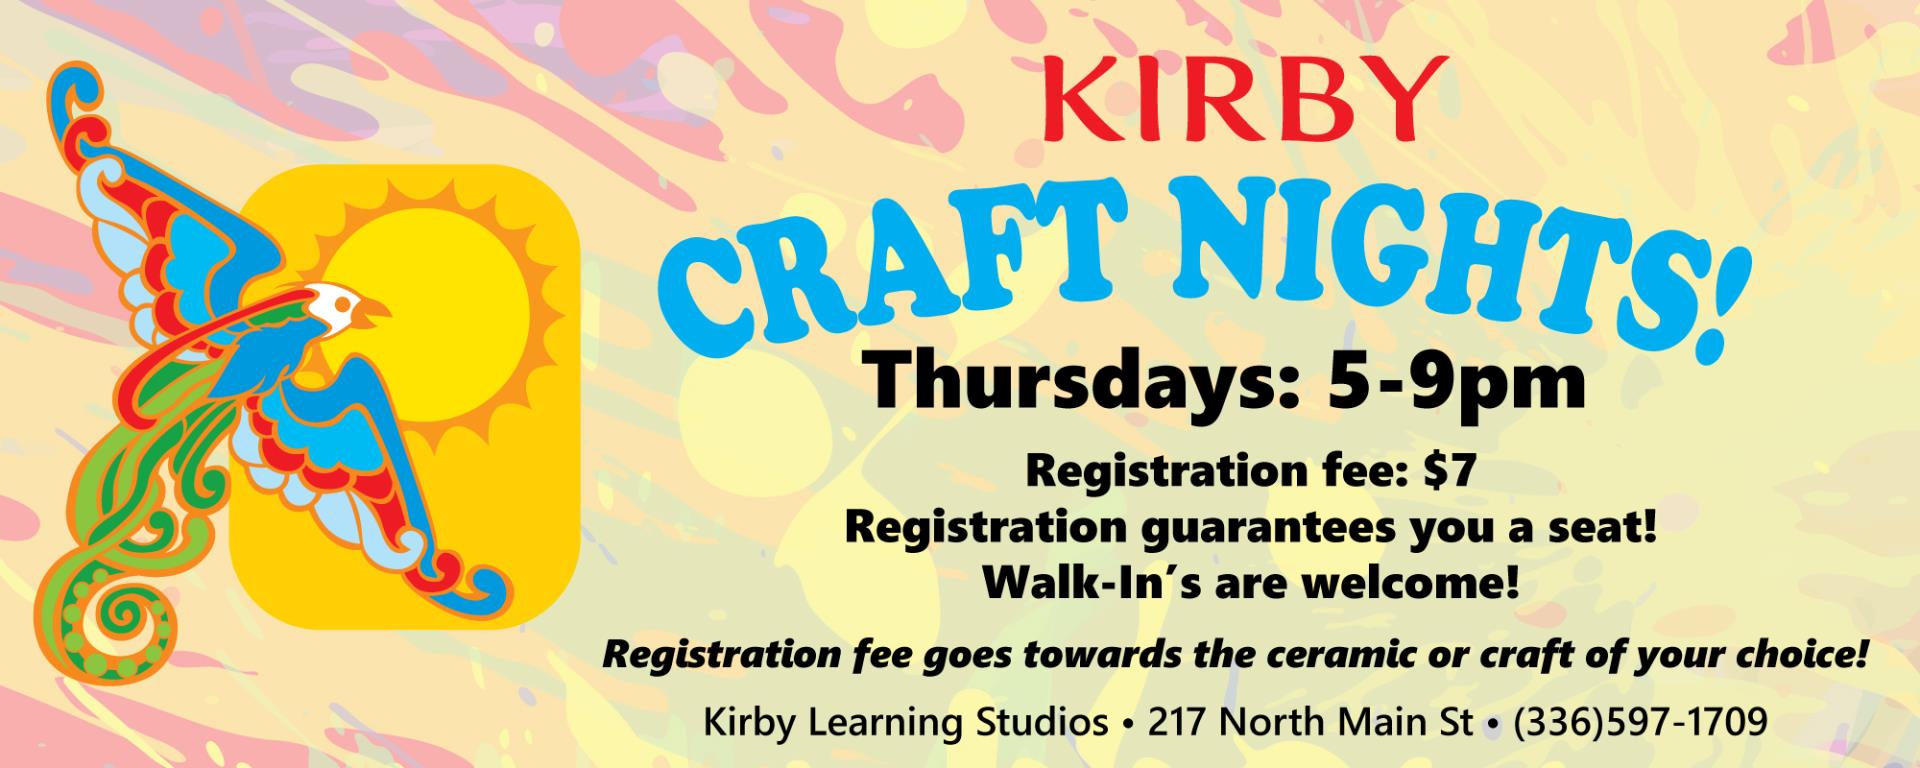 Kirby-Craft-Nights